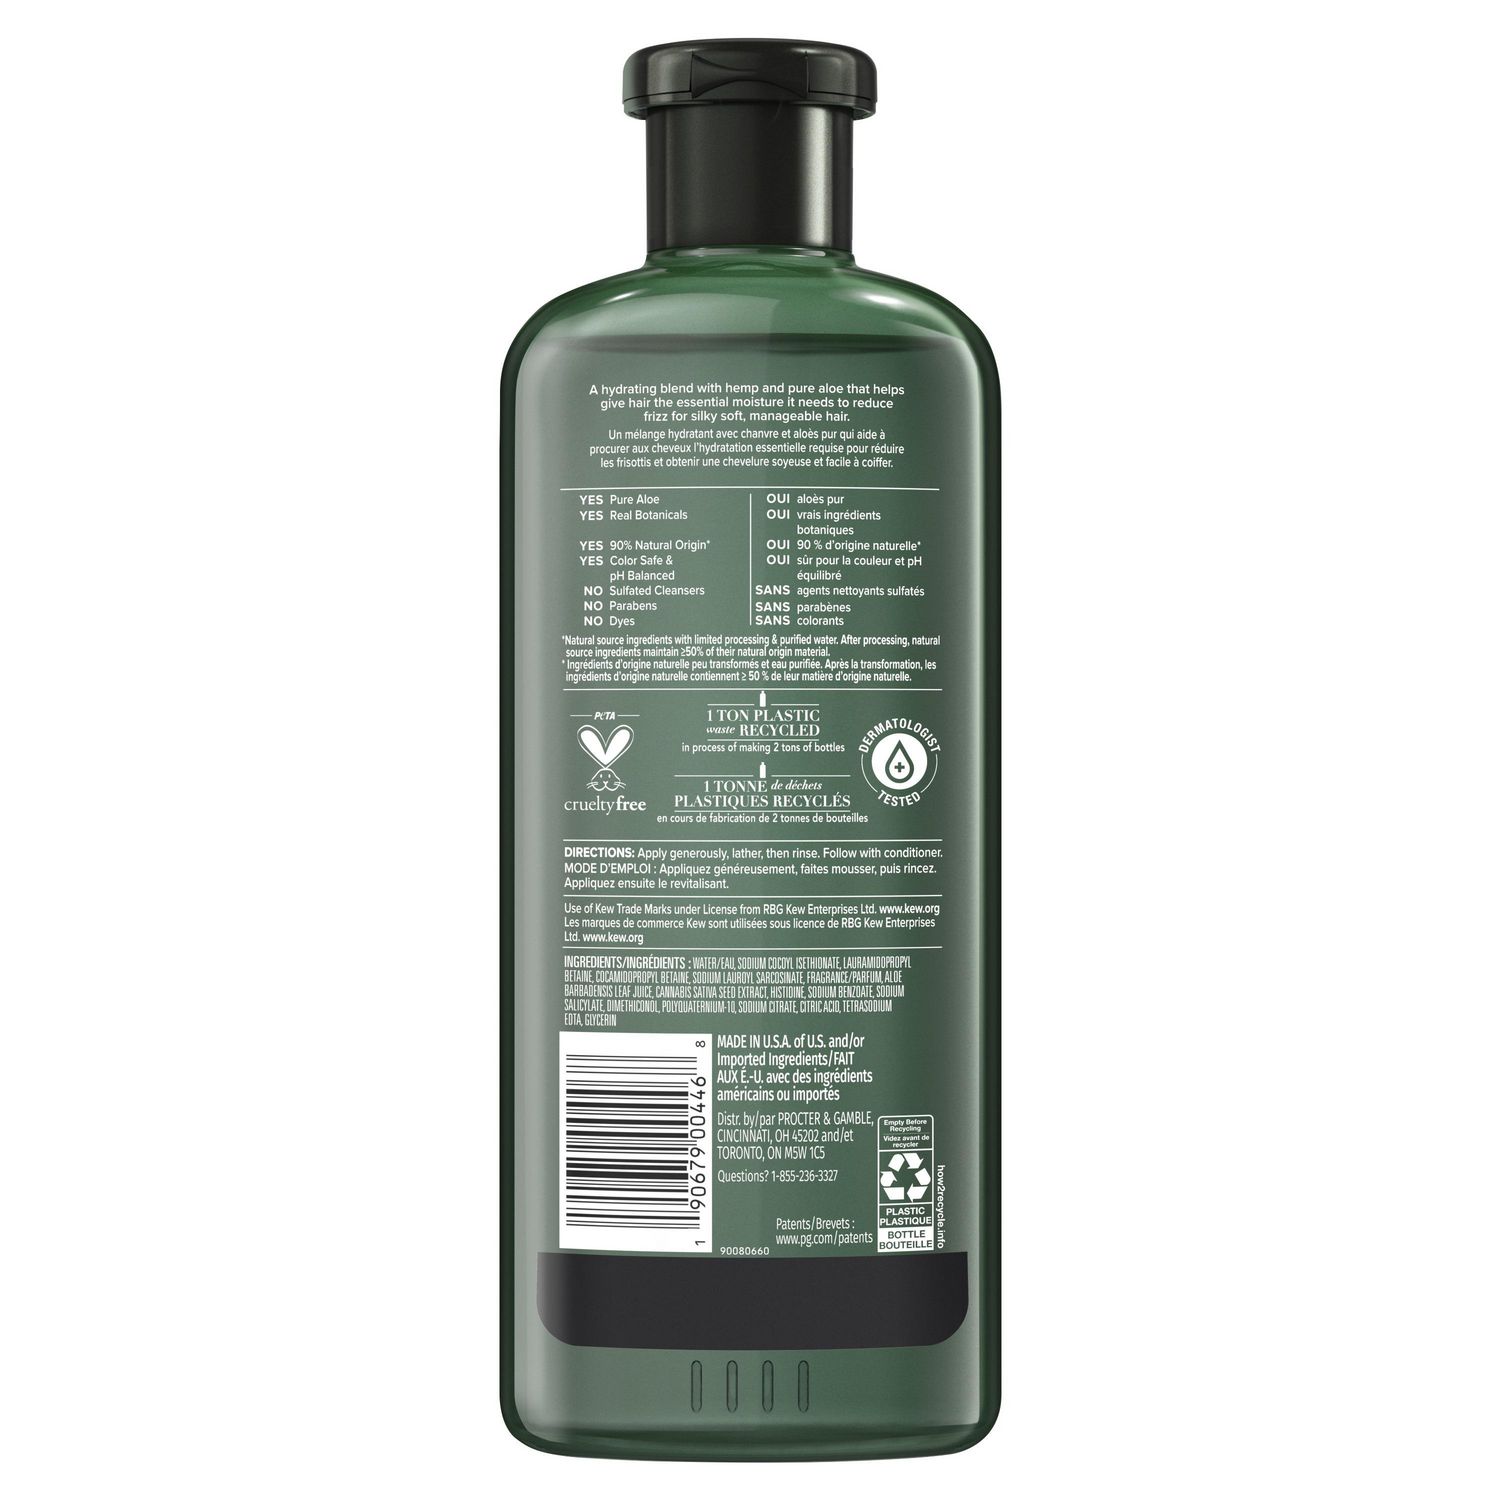 Buy Herbal Essences Bio Renew Pure Aloe & Bamboo Shampoo 380ml · USA  (Español)